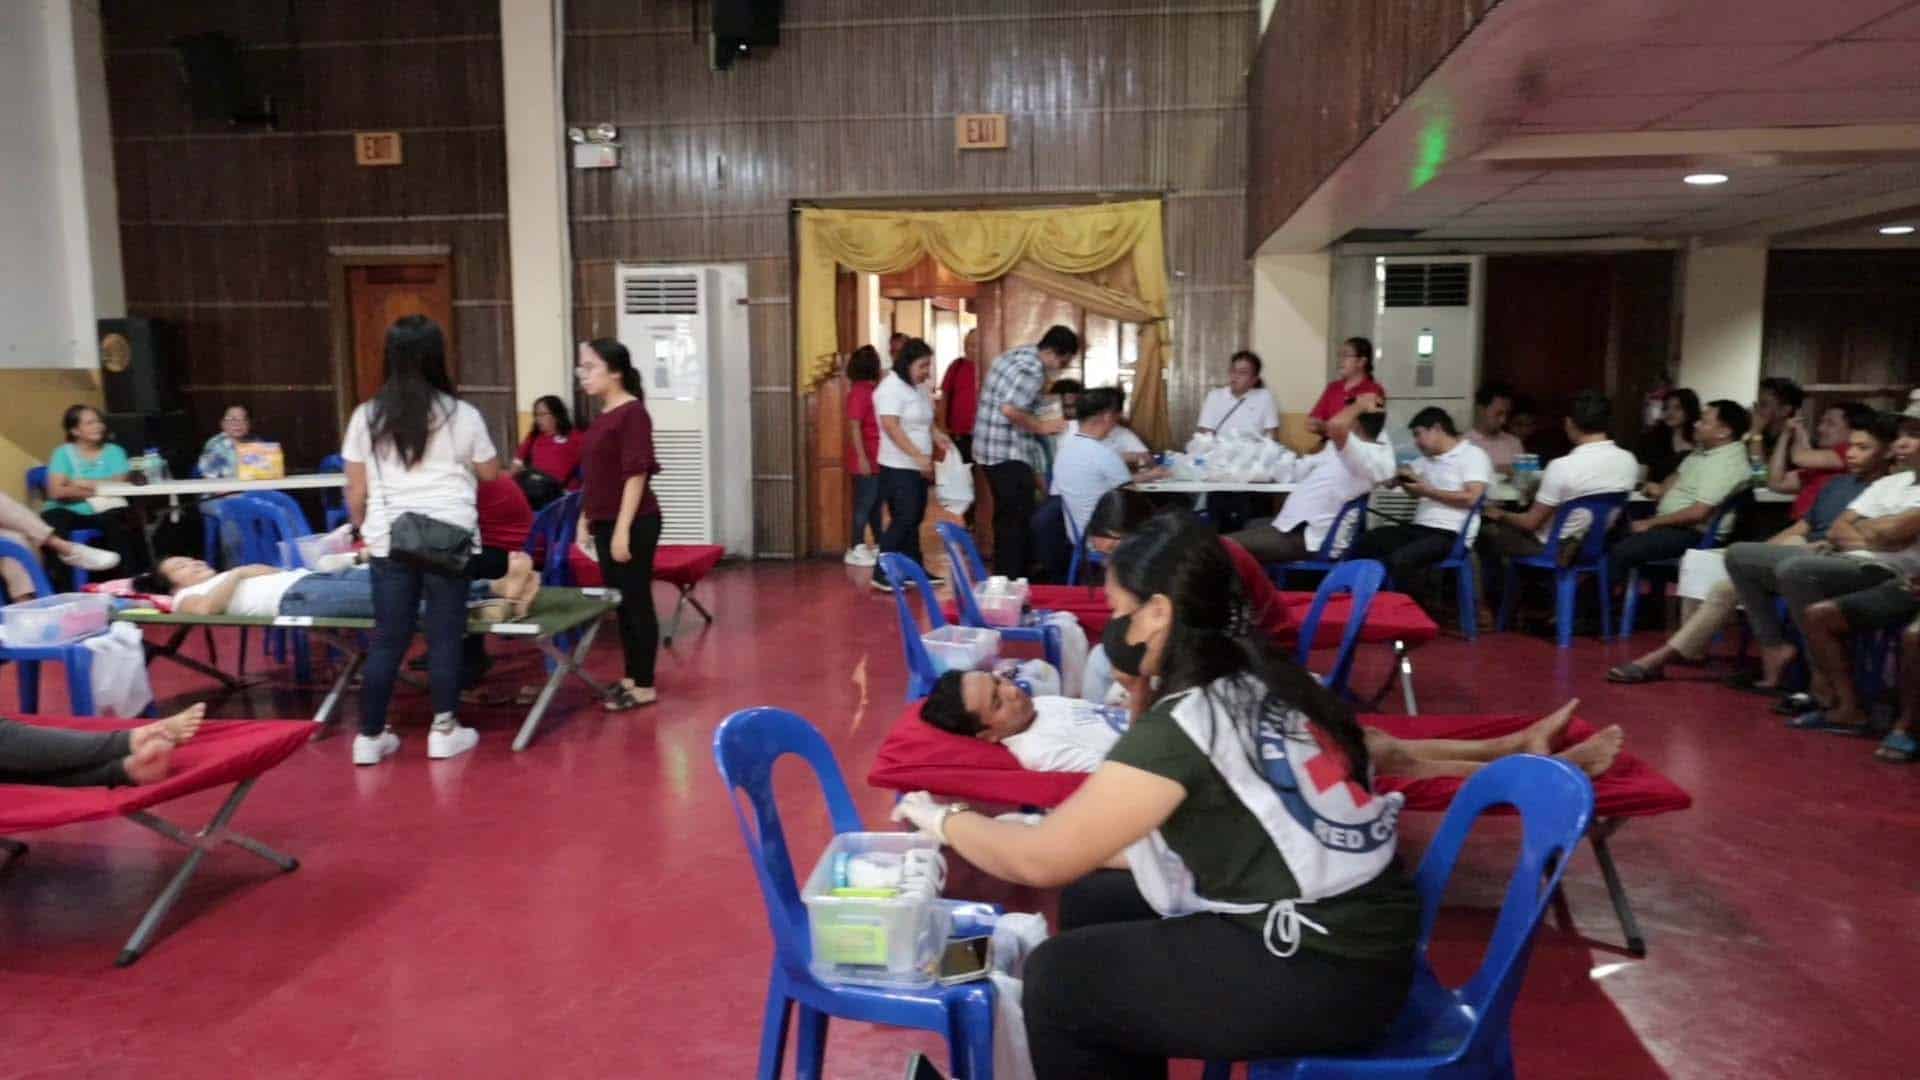 Ilocos Sur brethren show concern for fellowmen via blood donation